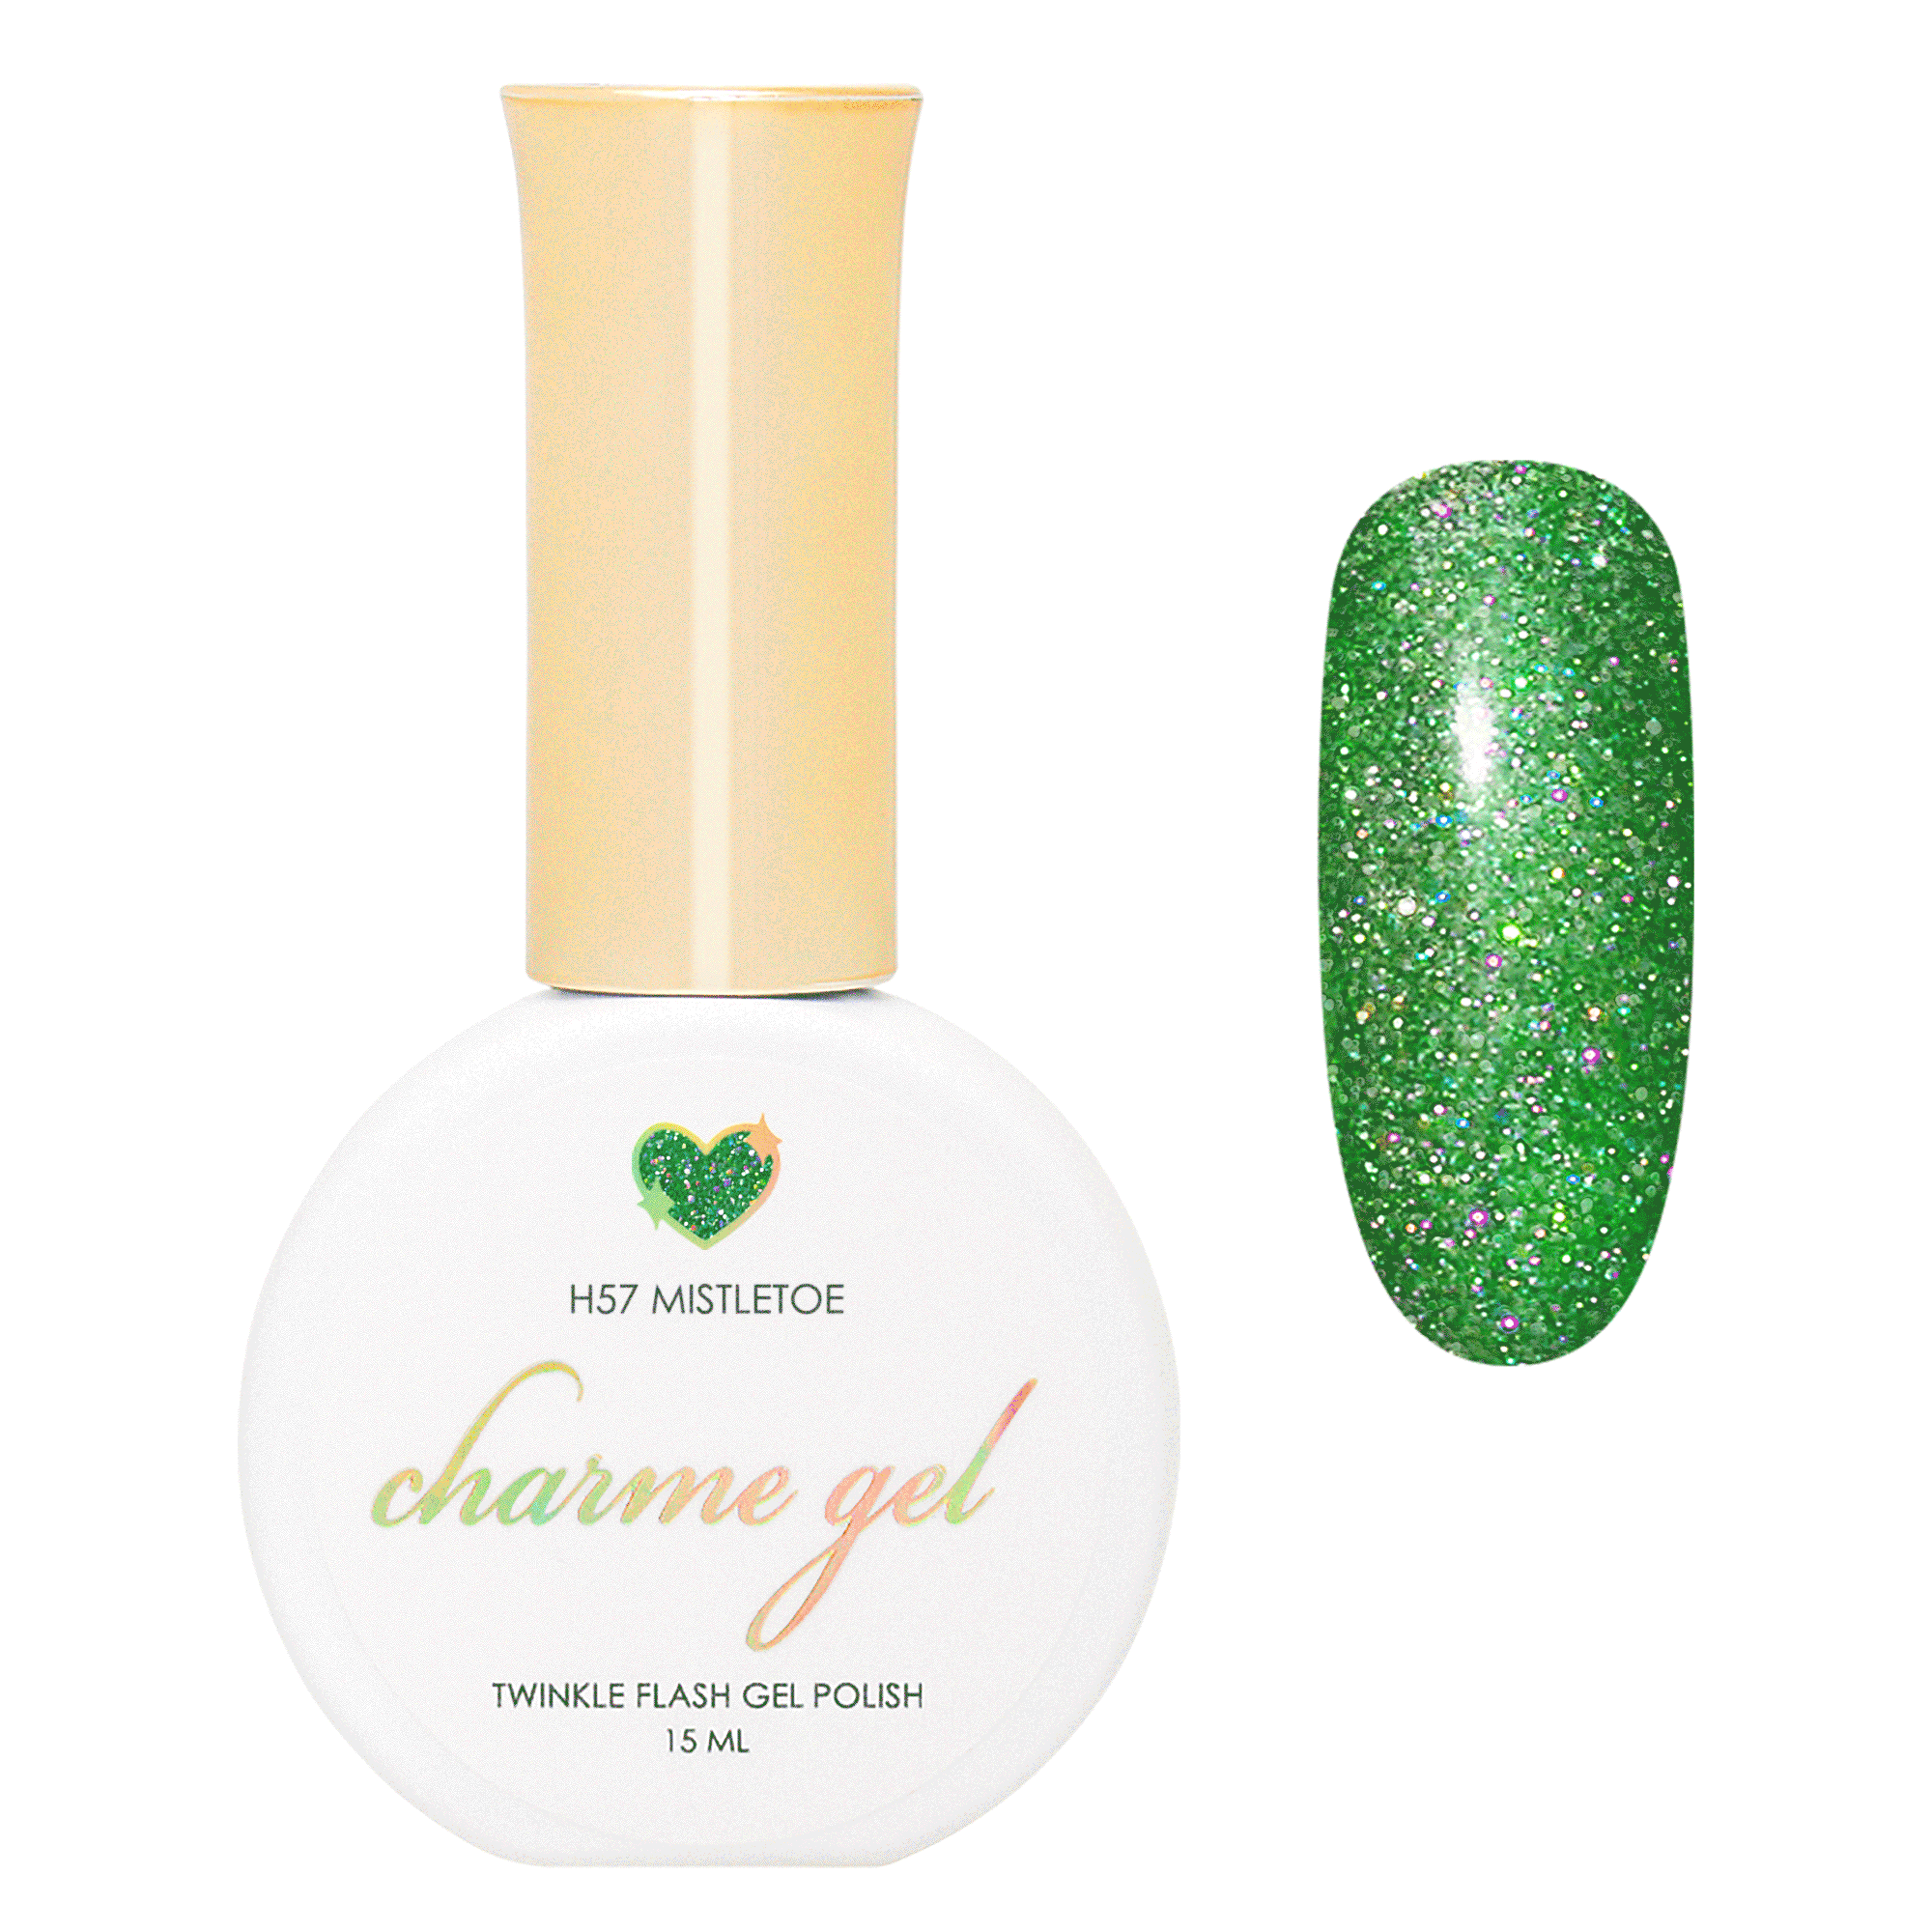 Charme Gel / Holoday Twinkle H57 Mistletoe Green Flash Nail Polish